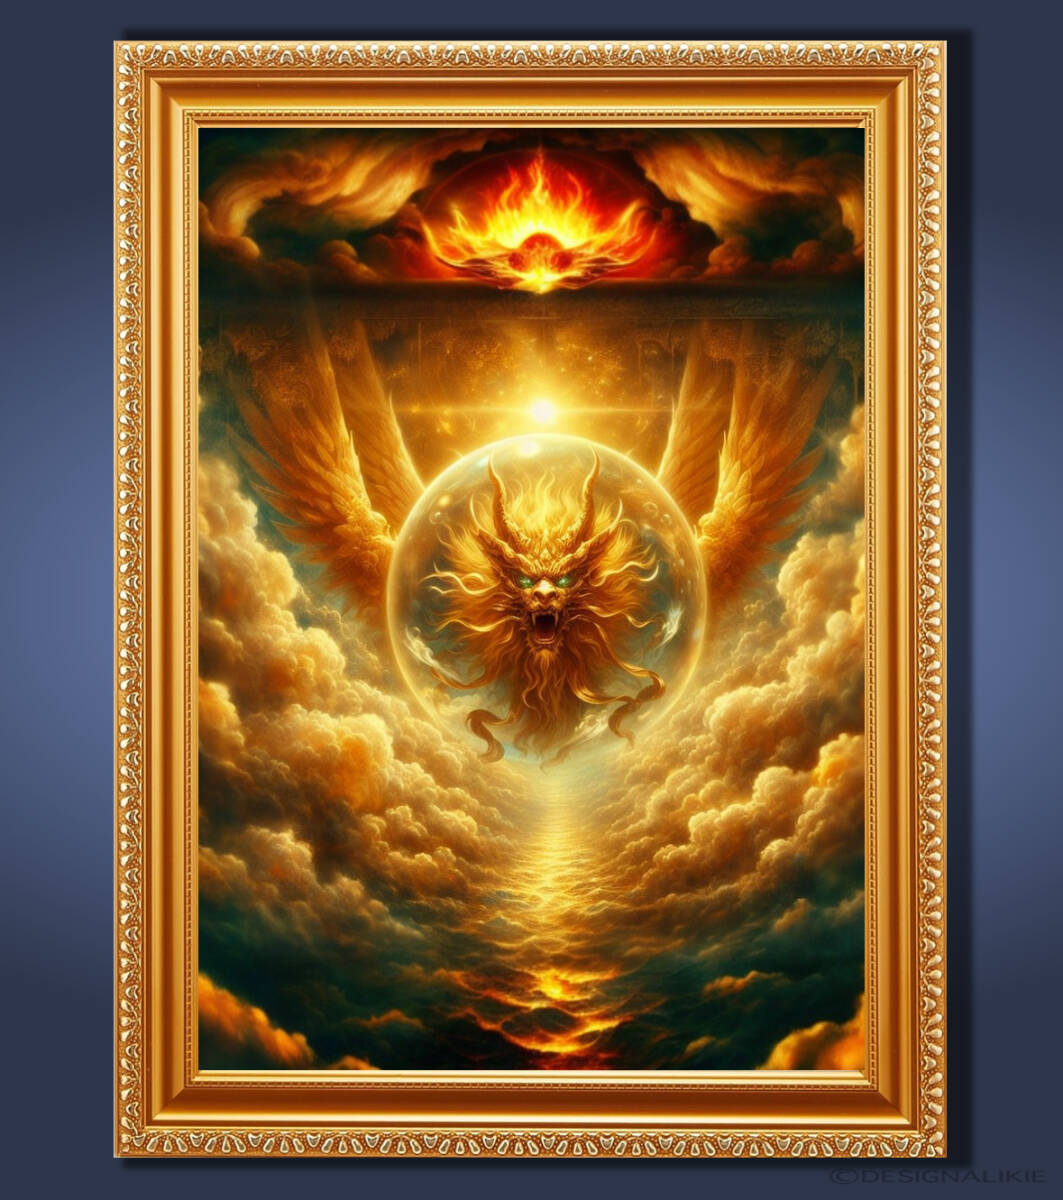 गोल्डन ड्रैगन दहाड़ के साथ आकाश को चीरता हुआ फ़्रेमयुक्त ग्राफ़िक आध्यात्मिक कला, कलाकृति, चित्रकारी, अन्य